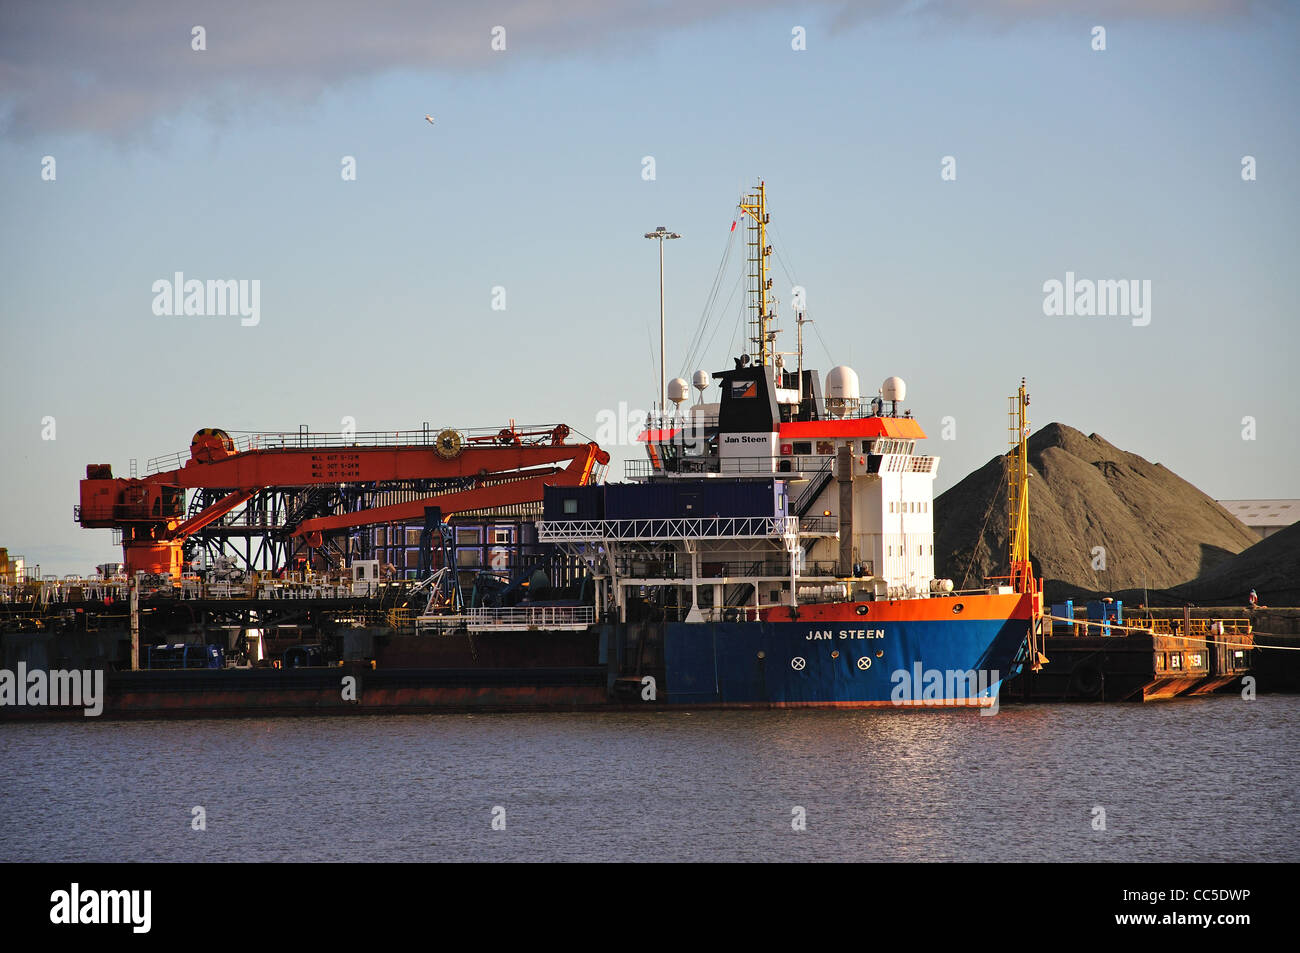 Dredger 'Jan Steen' ship at Sunderland Docks, Sunderland, Tyne and Wear, England, United Kingdom Stock Photo